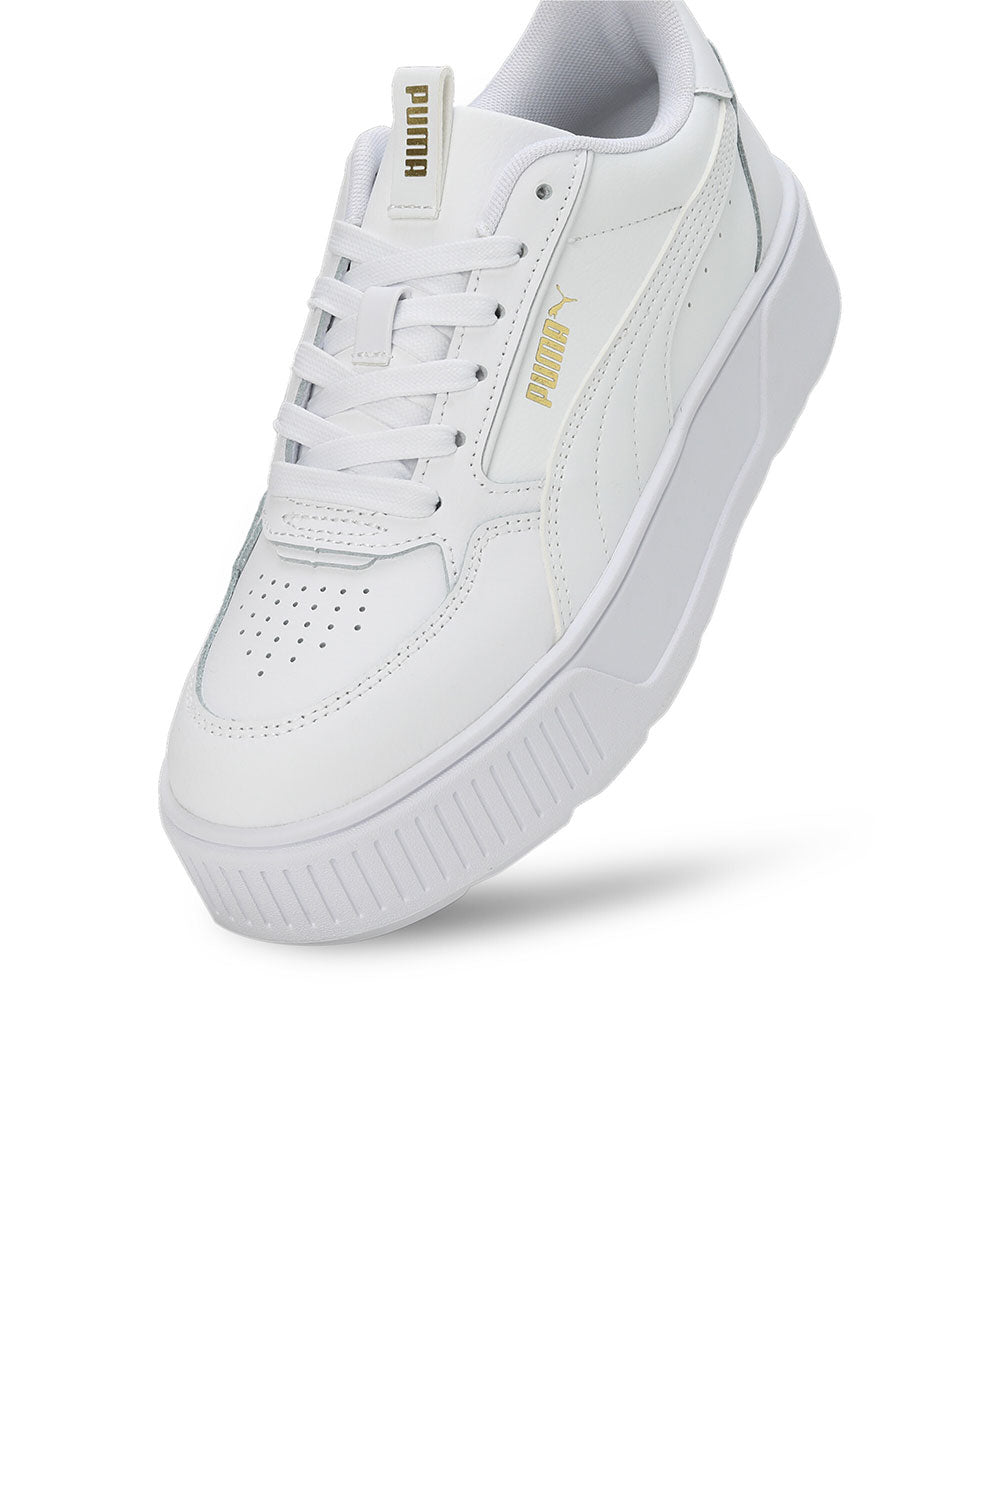 Puma נעלי סניקרס Karmen פלטפורמה בצבע לבן לנשים-Puma-36-נאקו